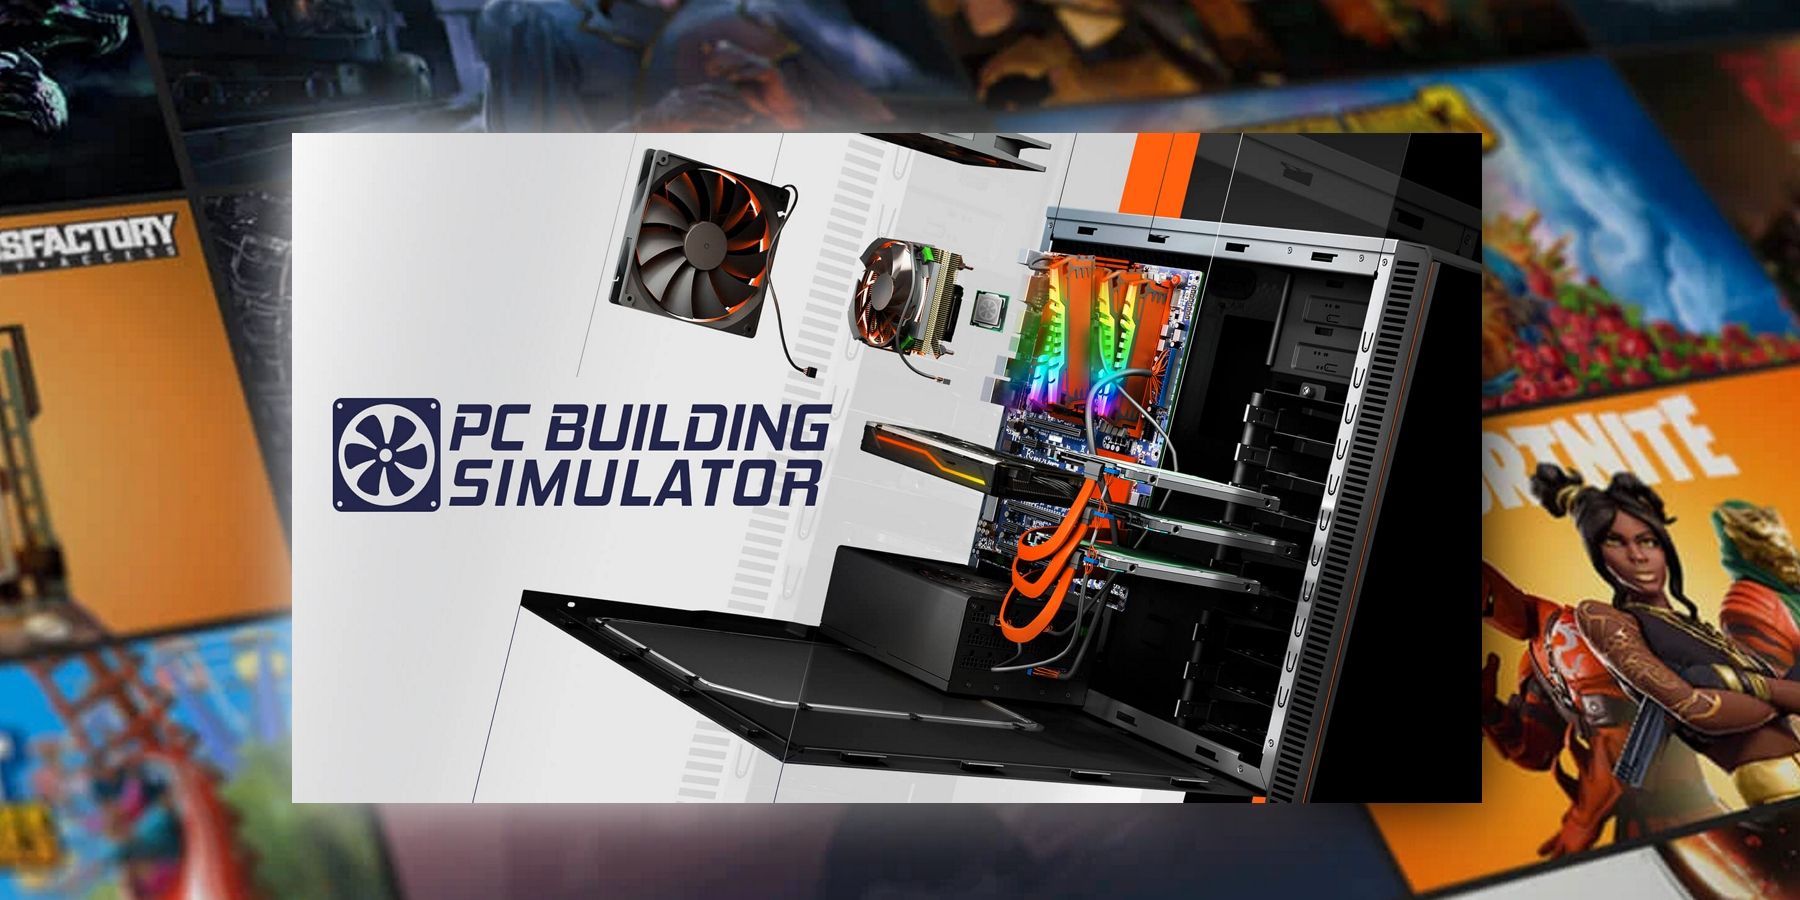 Epic Games Store Gratis game PC Building Simulator uitgelegd